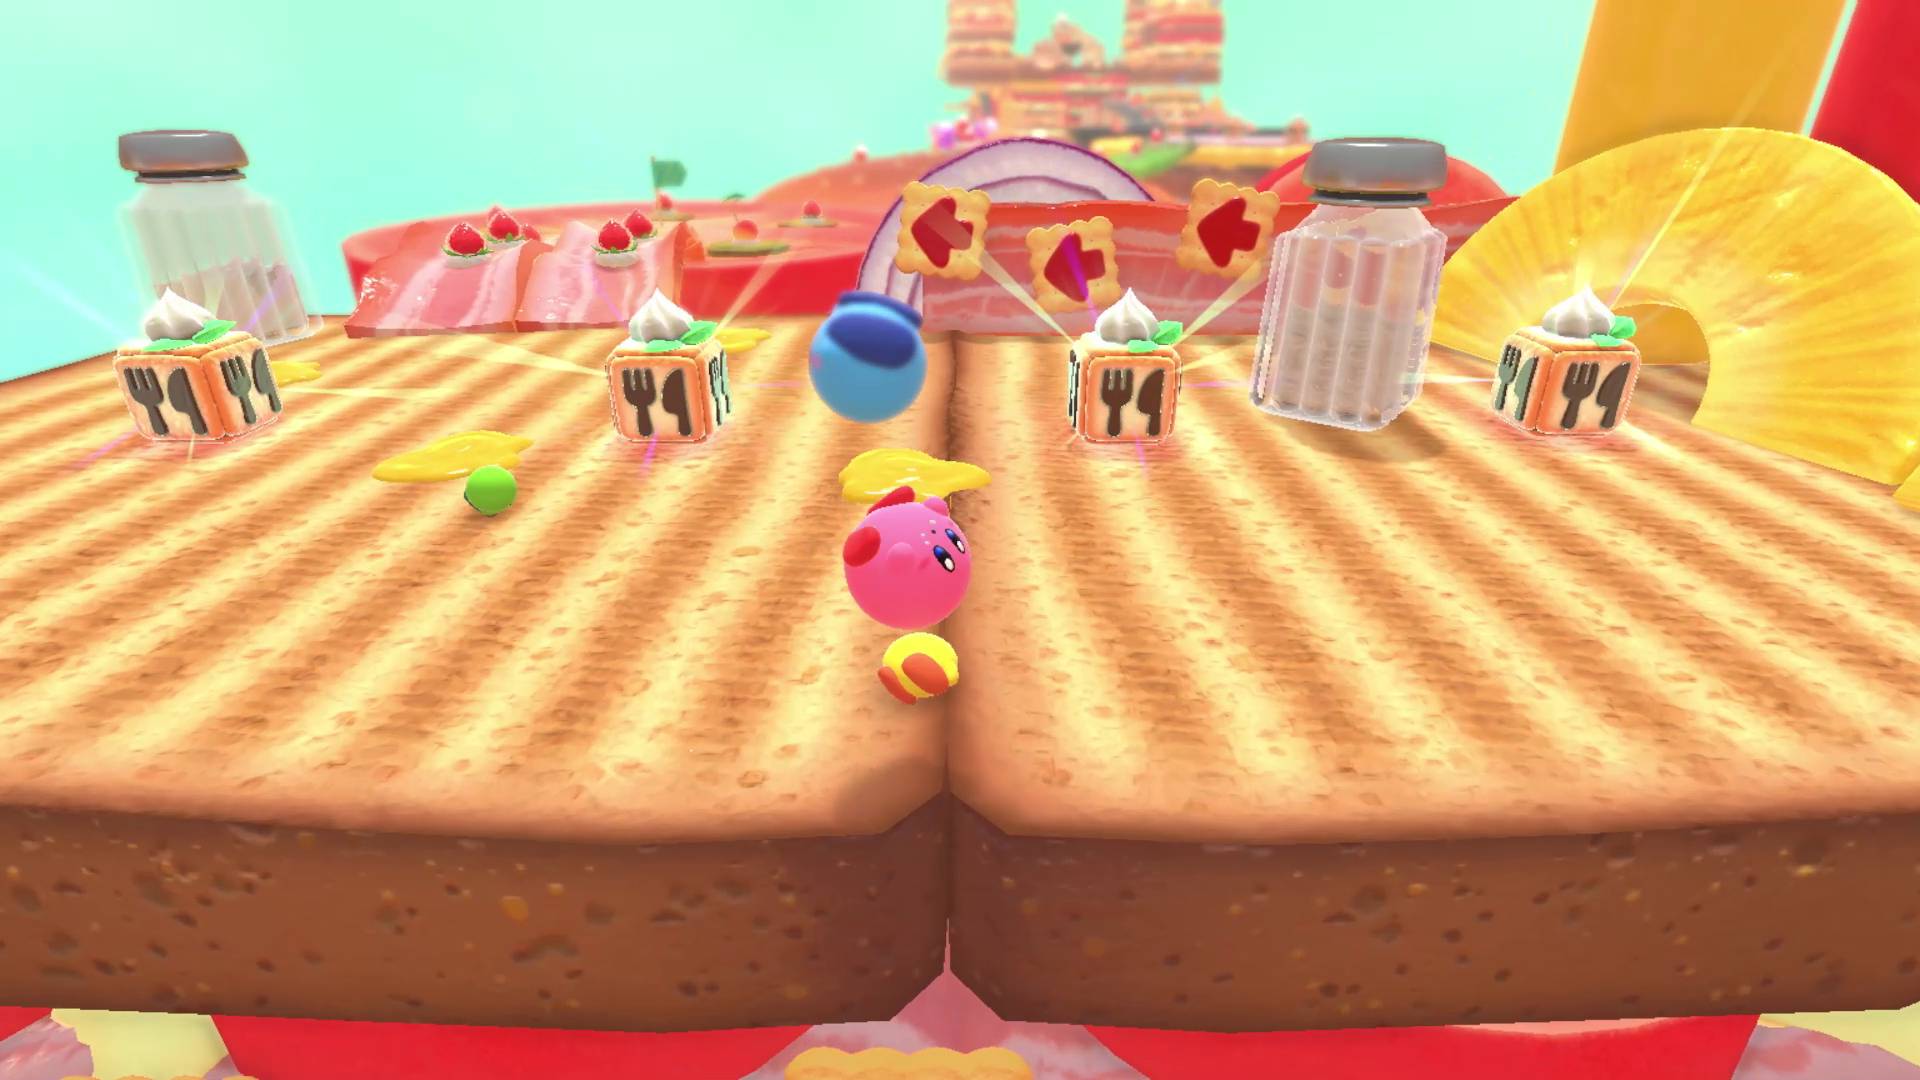 7 Ways To Improve Kirby's Dream Buffet